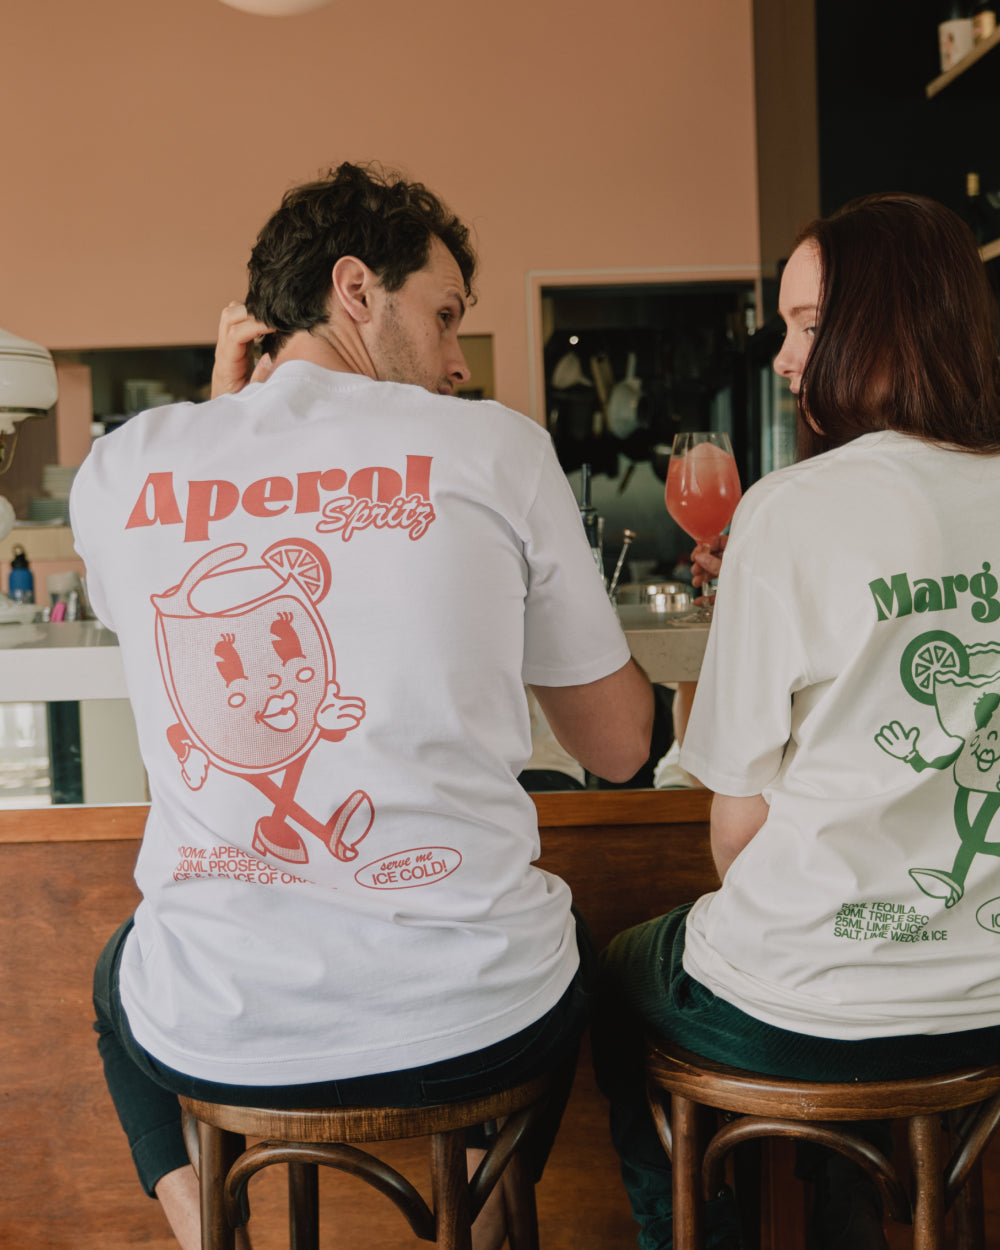 Aperol Spritz T-Shirt